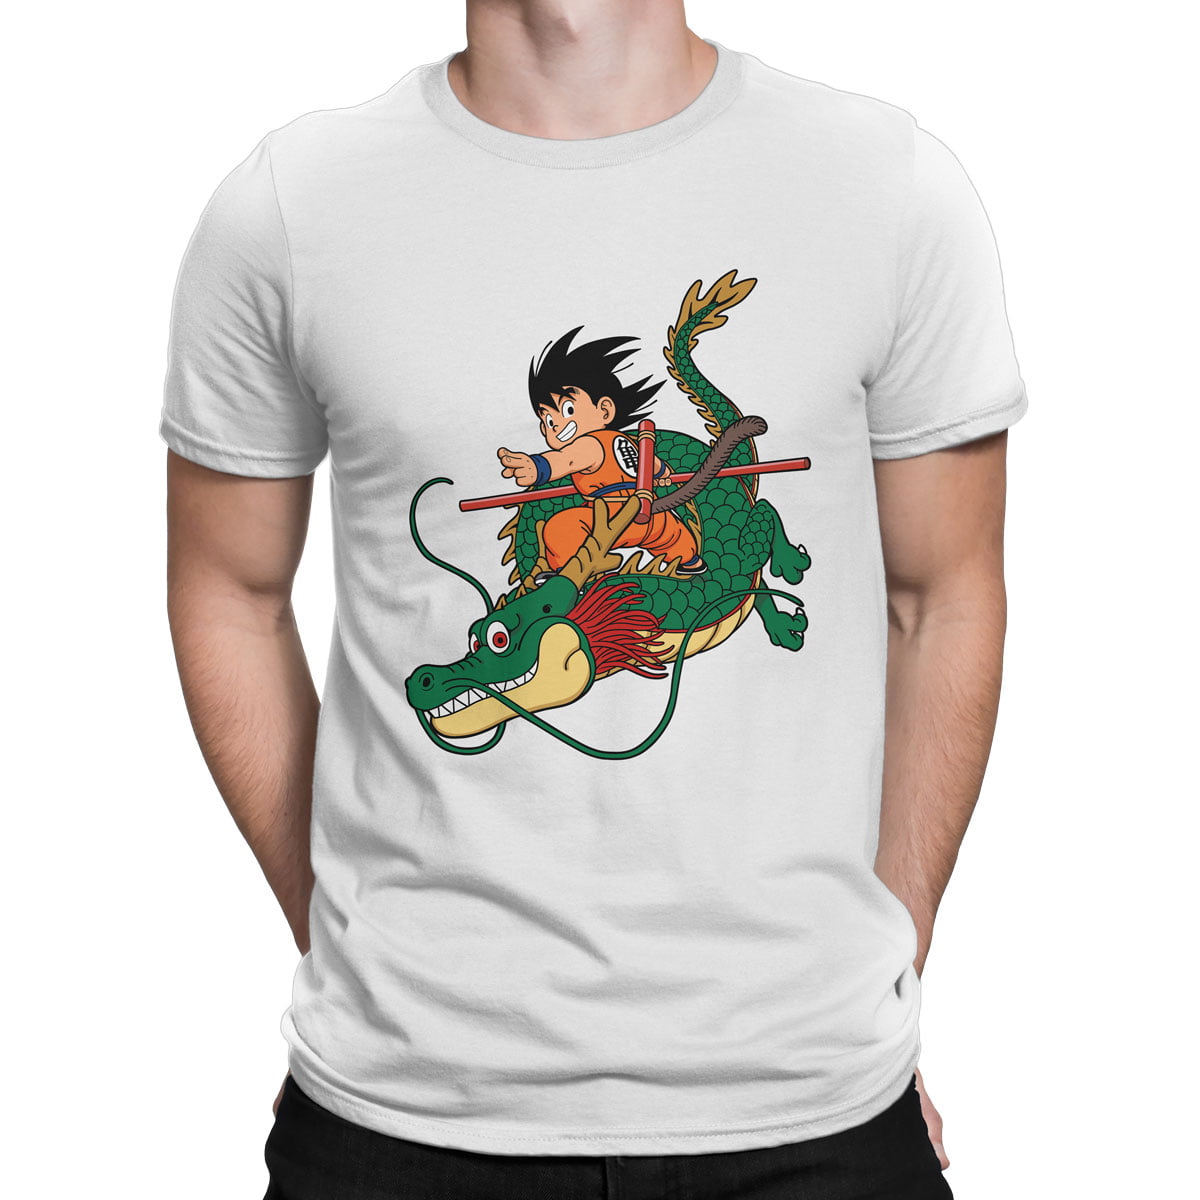 Dragonball 3 shirt b erkek - dragon ball goku no5 baskılı erkek t-shirt - figurex